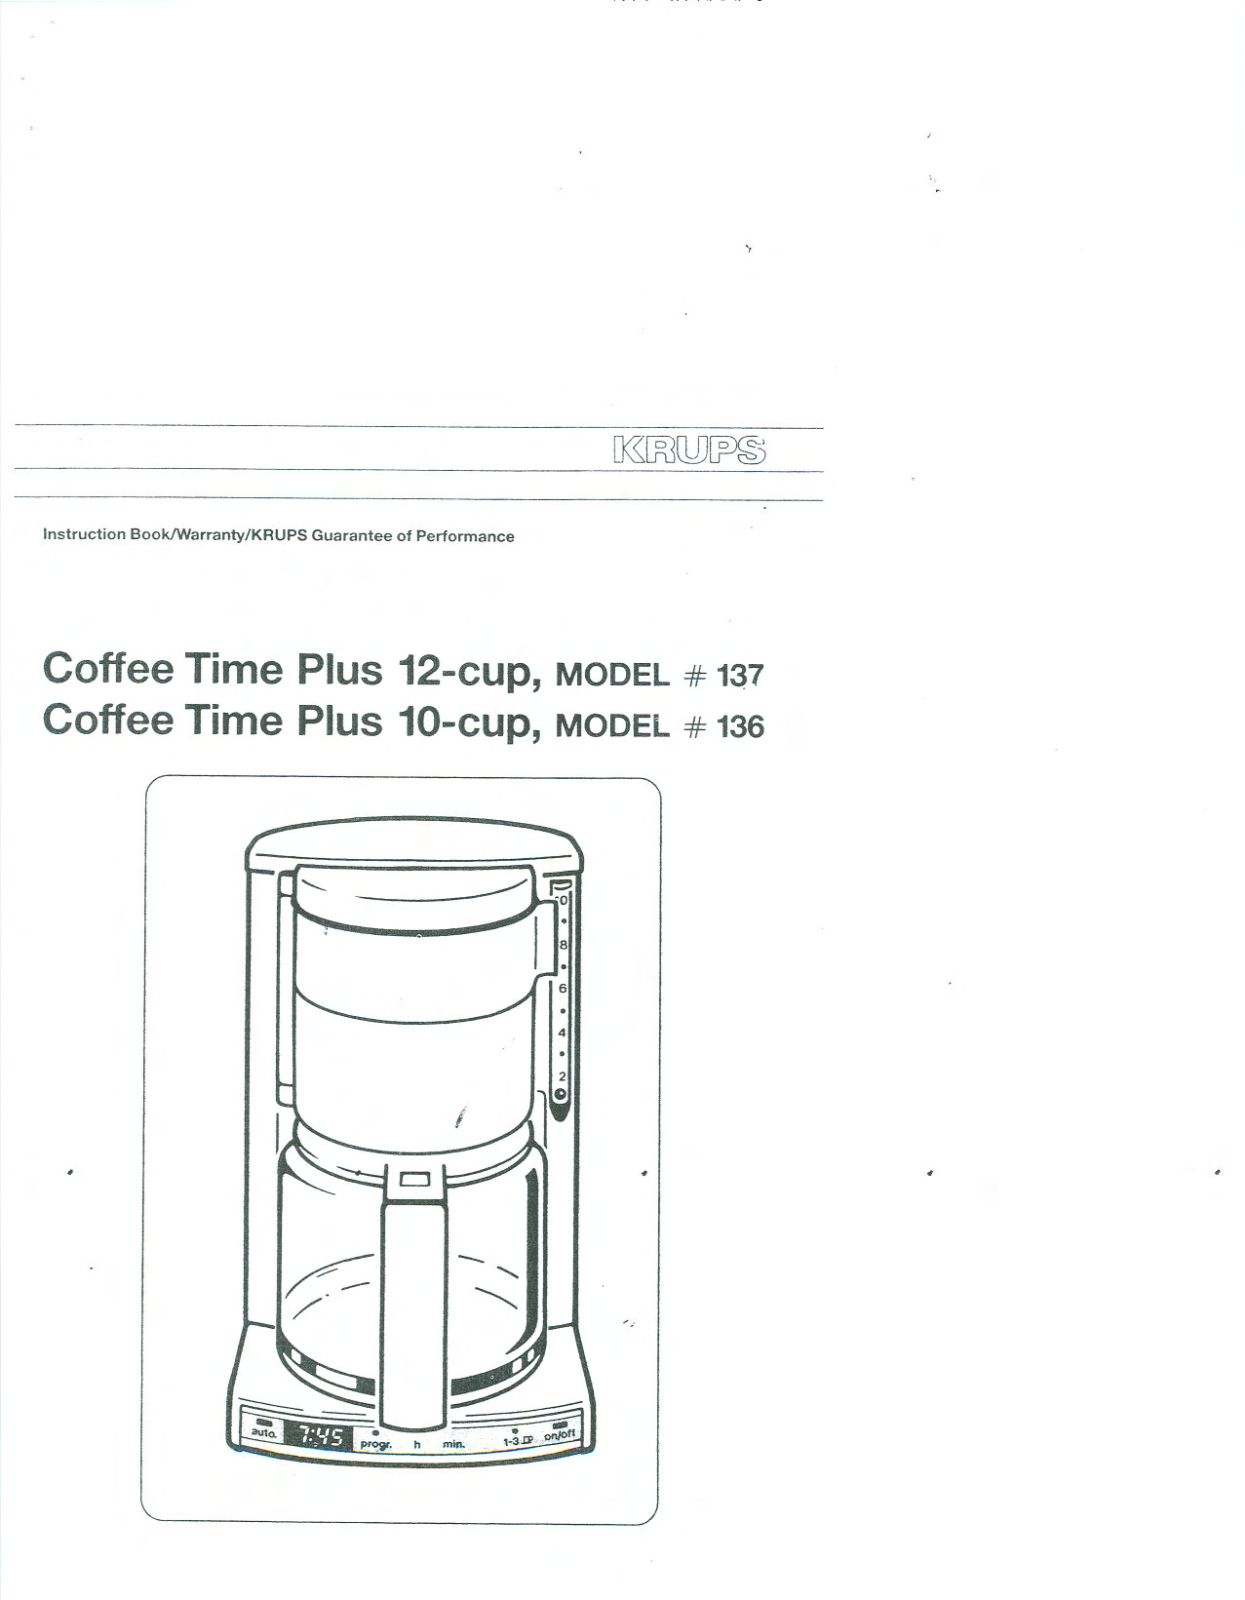 Krups COFFEE TIME PLUS 12-CUP, COFFEE TIME PLUS 10-CUP, 137 User Manual